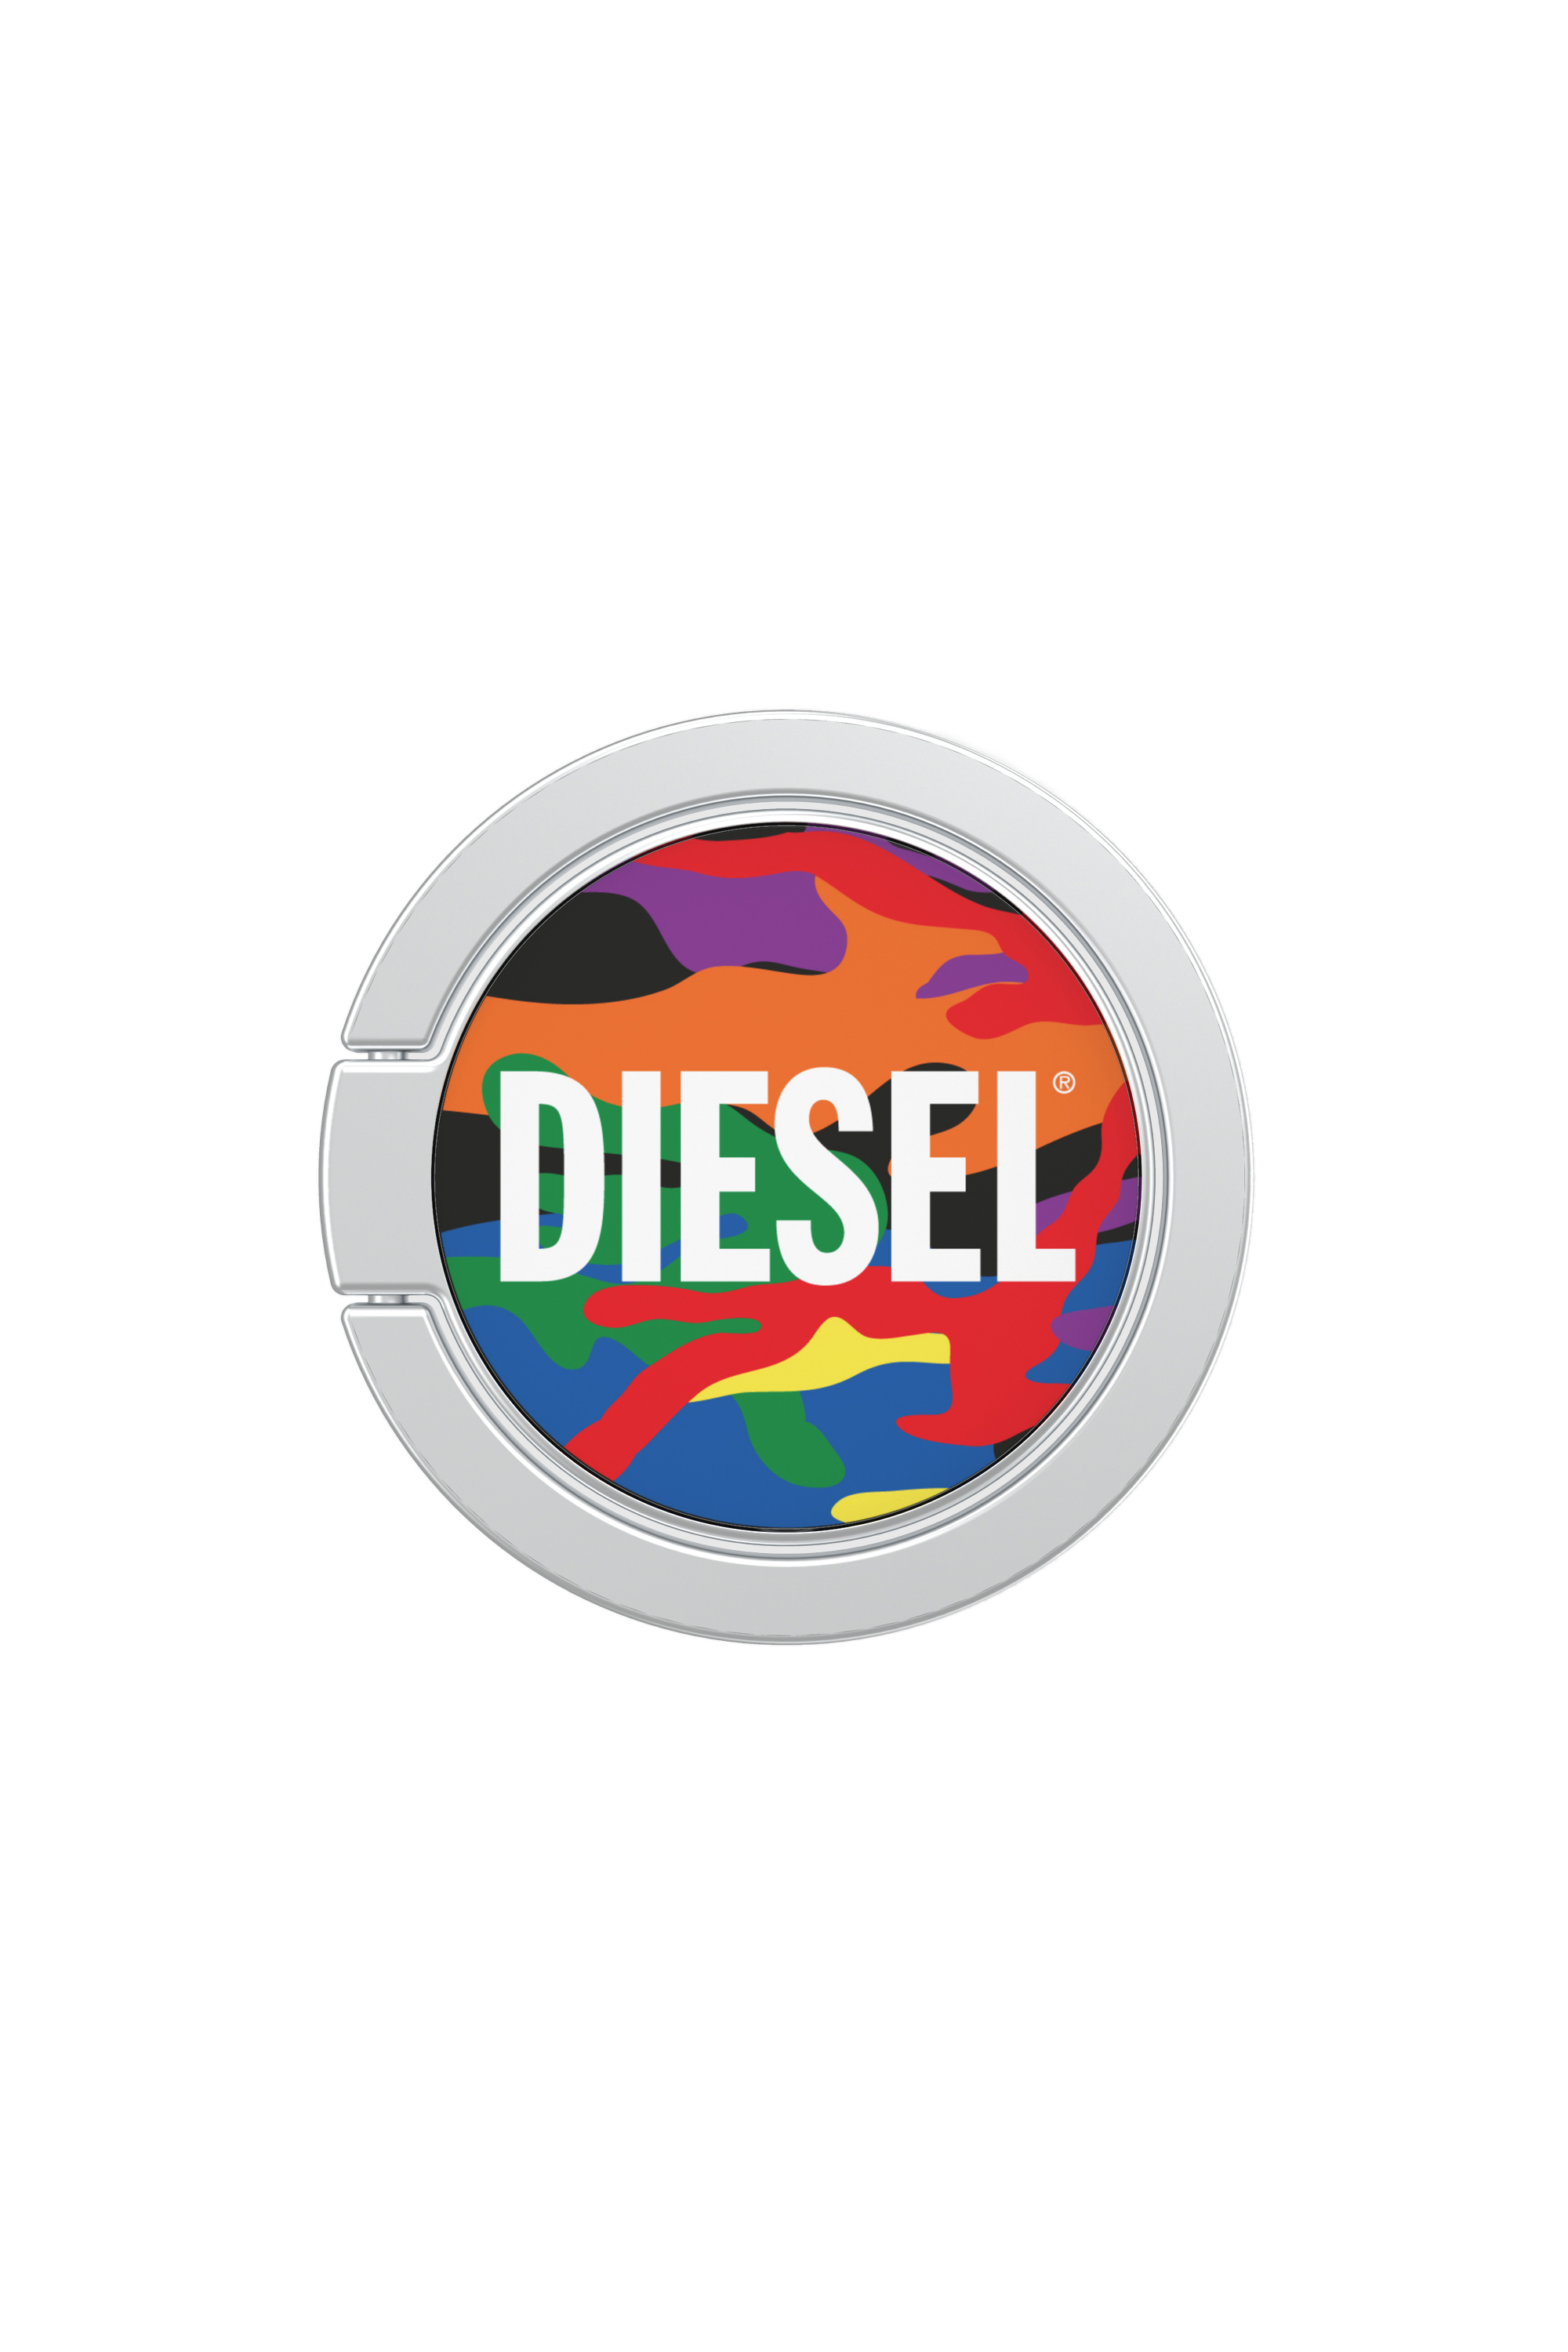 Diesel - Universeller Handyring Pride für Smartphones - Telefonringhalter - Unisex - Bunt